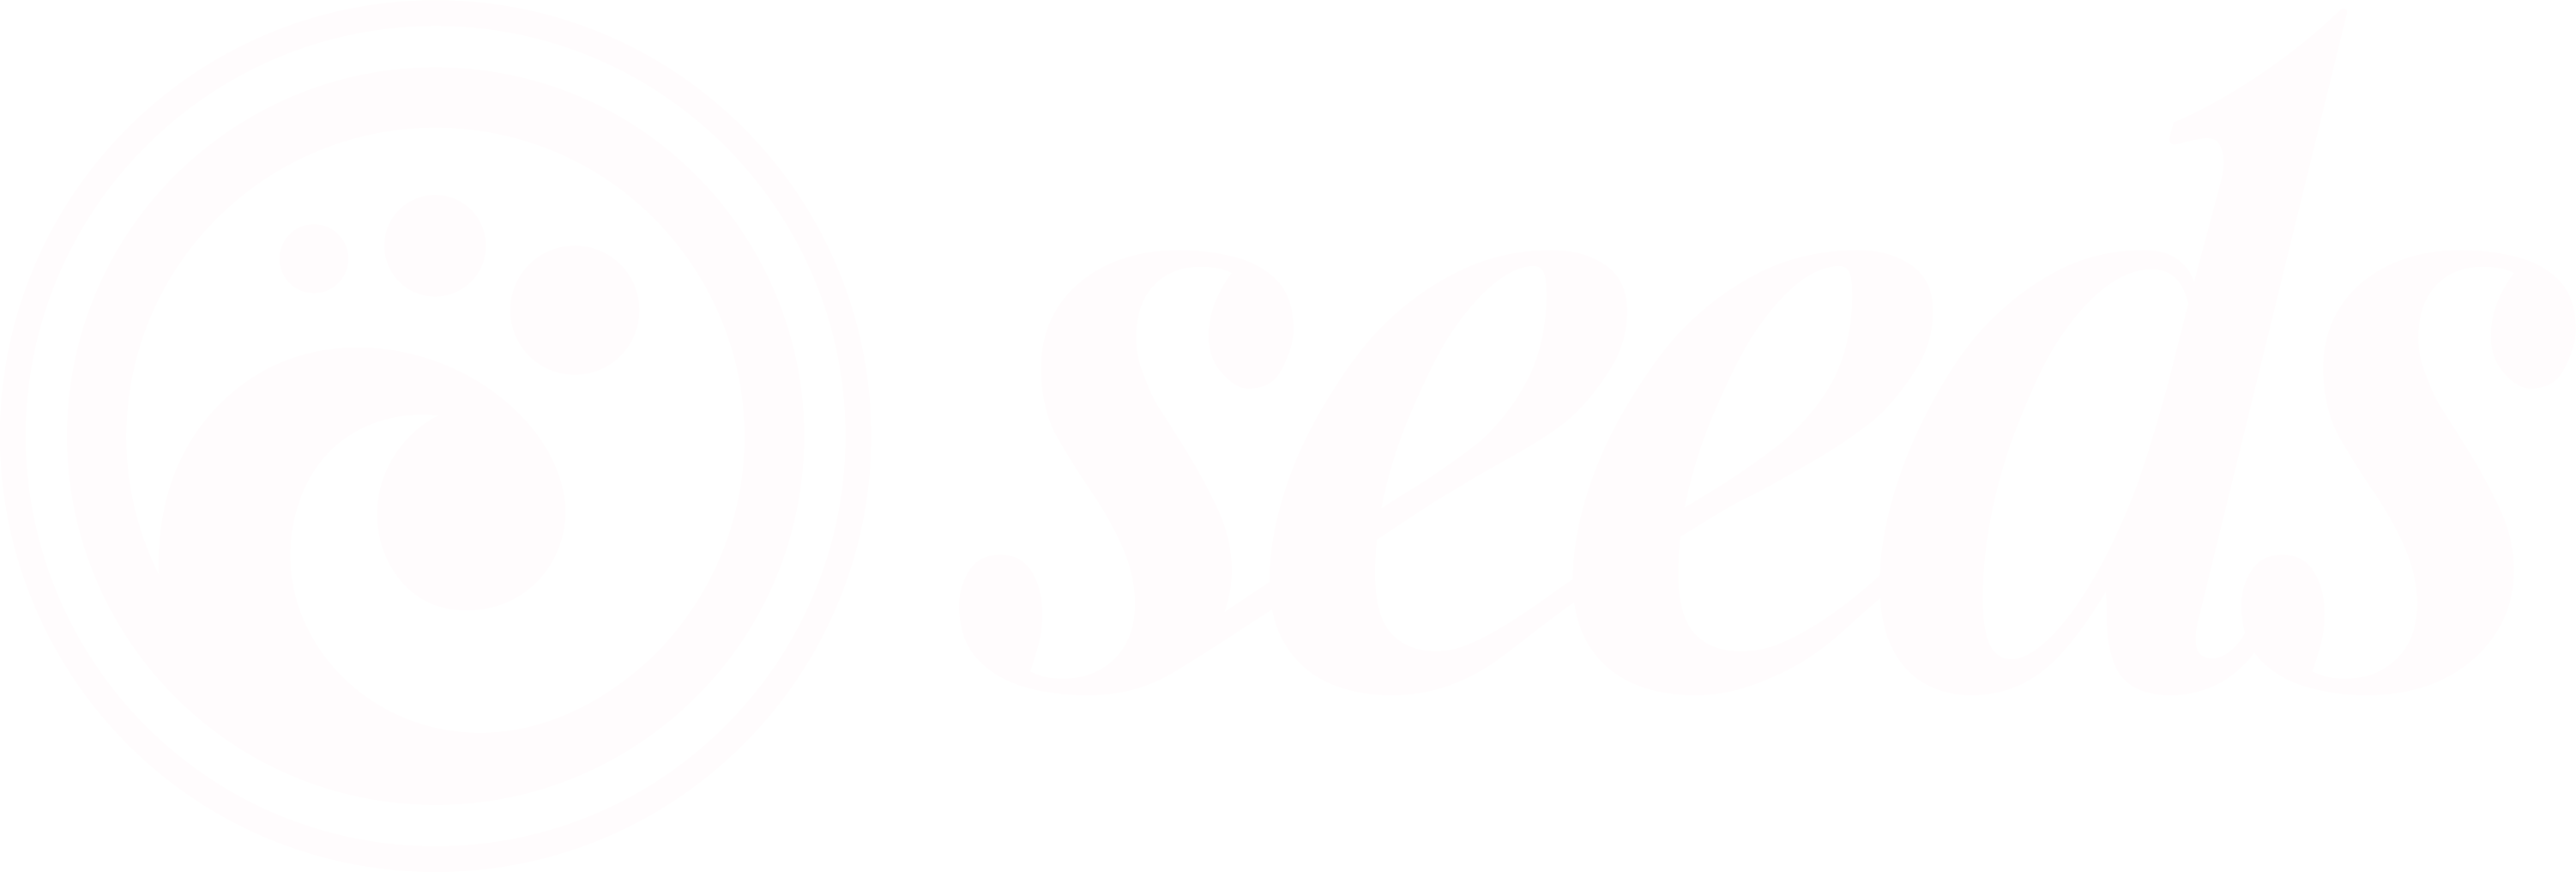 seeds logo